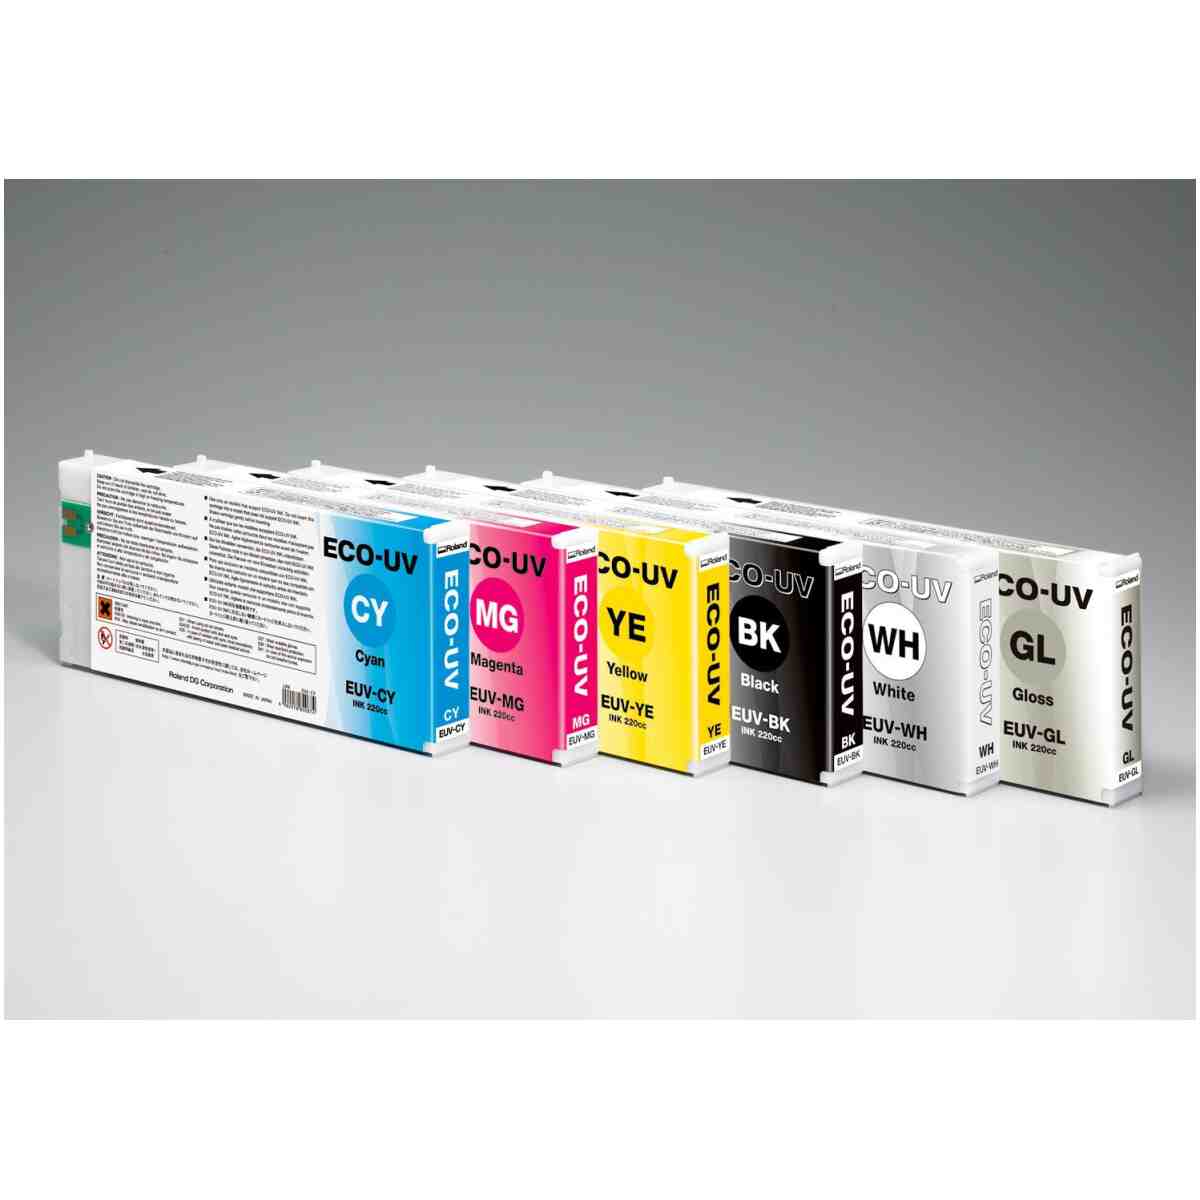 Eco-Uvs - 2 Magenta Ink Cartridge - 220Ml ROLAND®